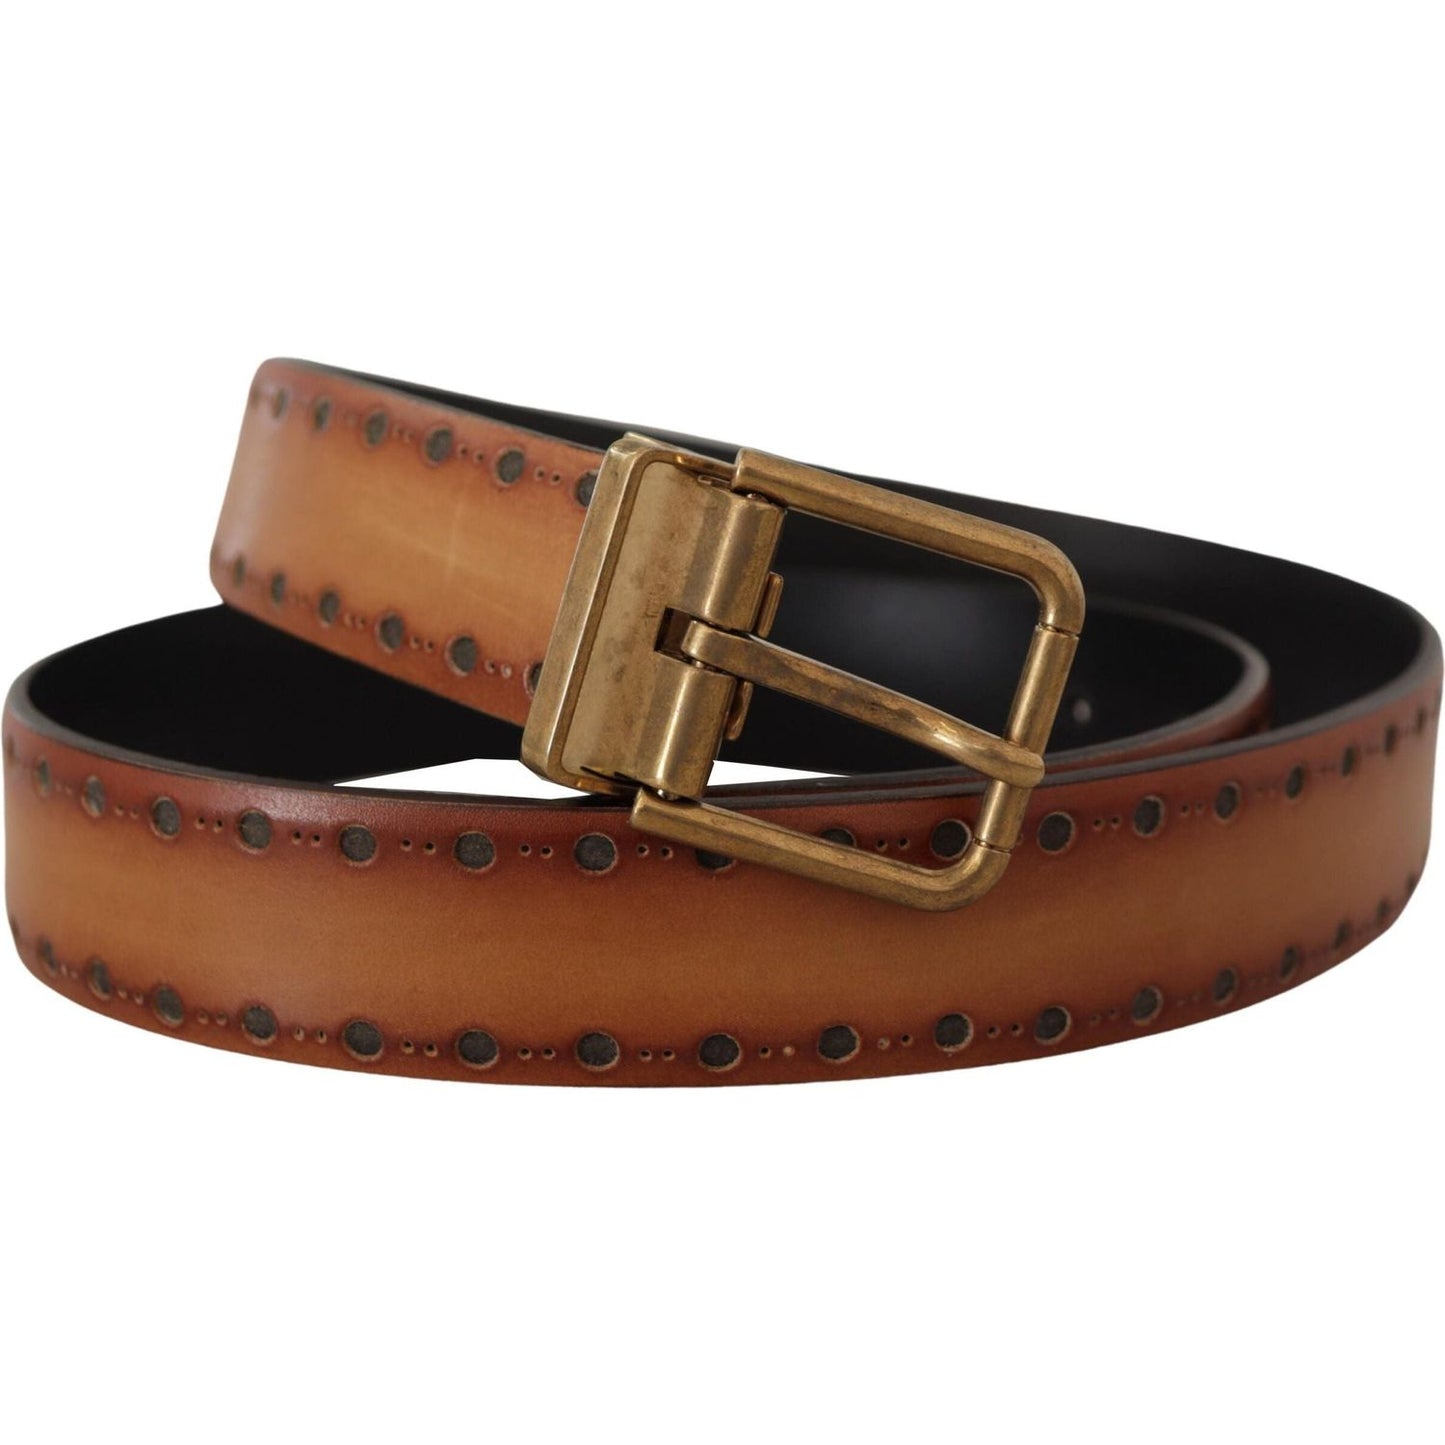 Dolce & Gabbana Elegant Brown Leather Belt with Brass Buckle brown-leather-dress-brass-metal-logo-buckle-belt